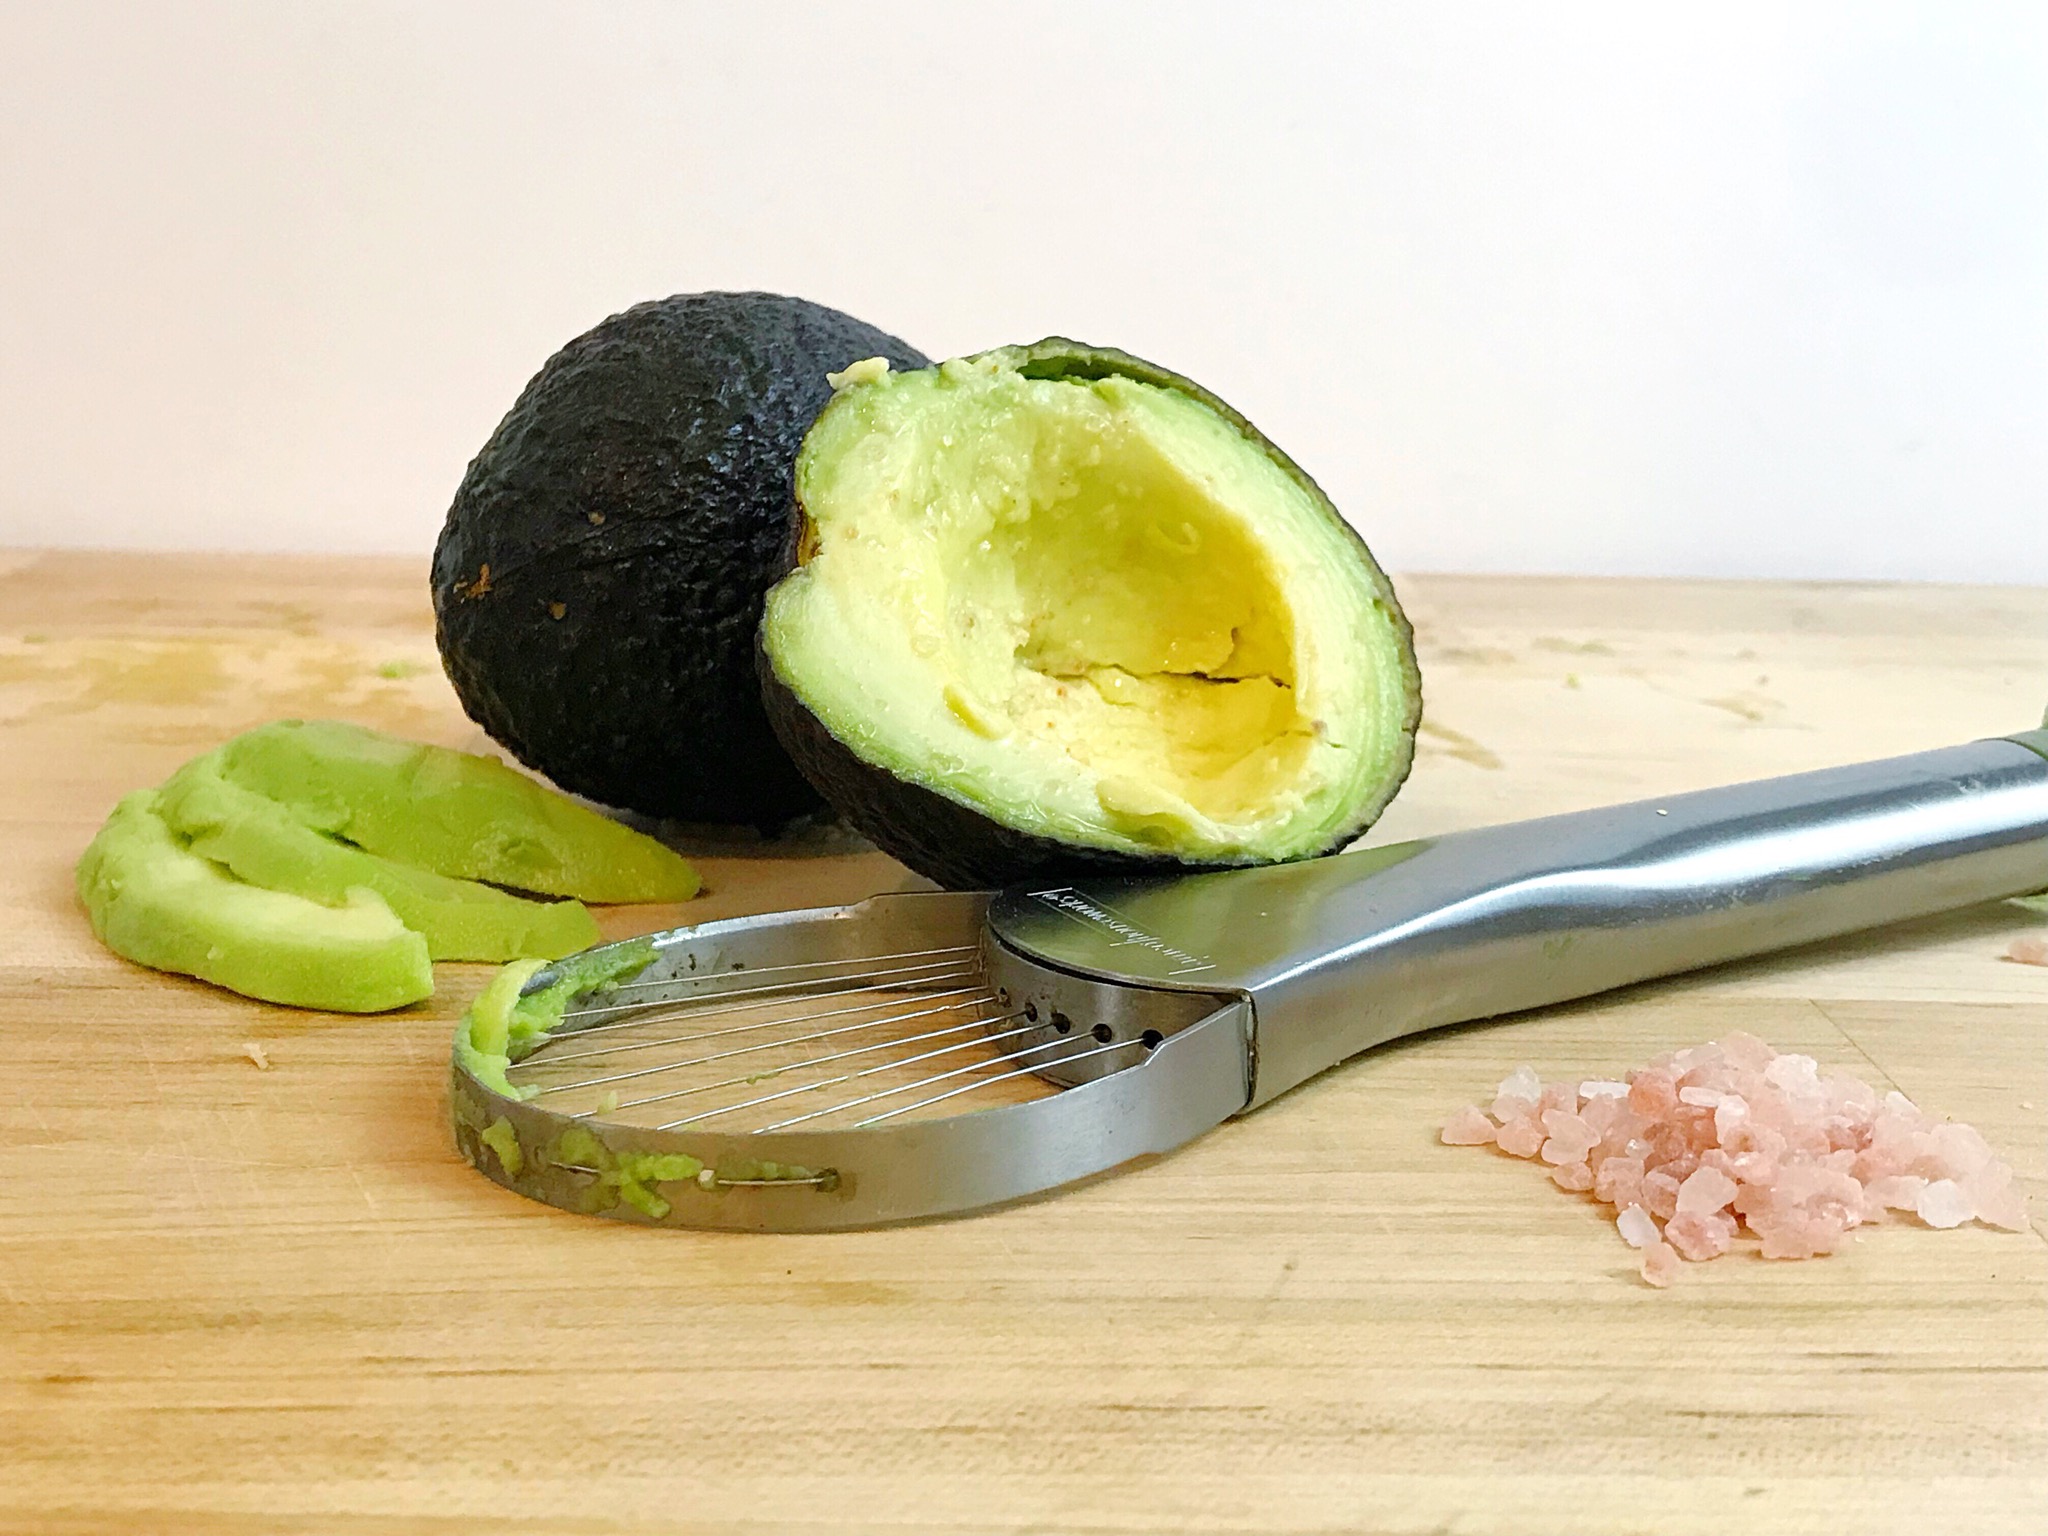 Avoid Avocado Hand - Get an Avocado Slicer